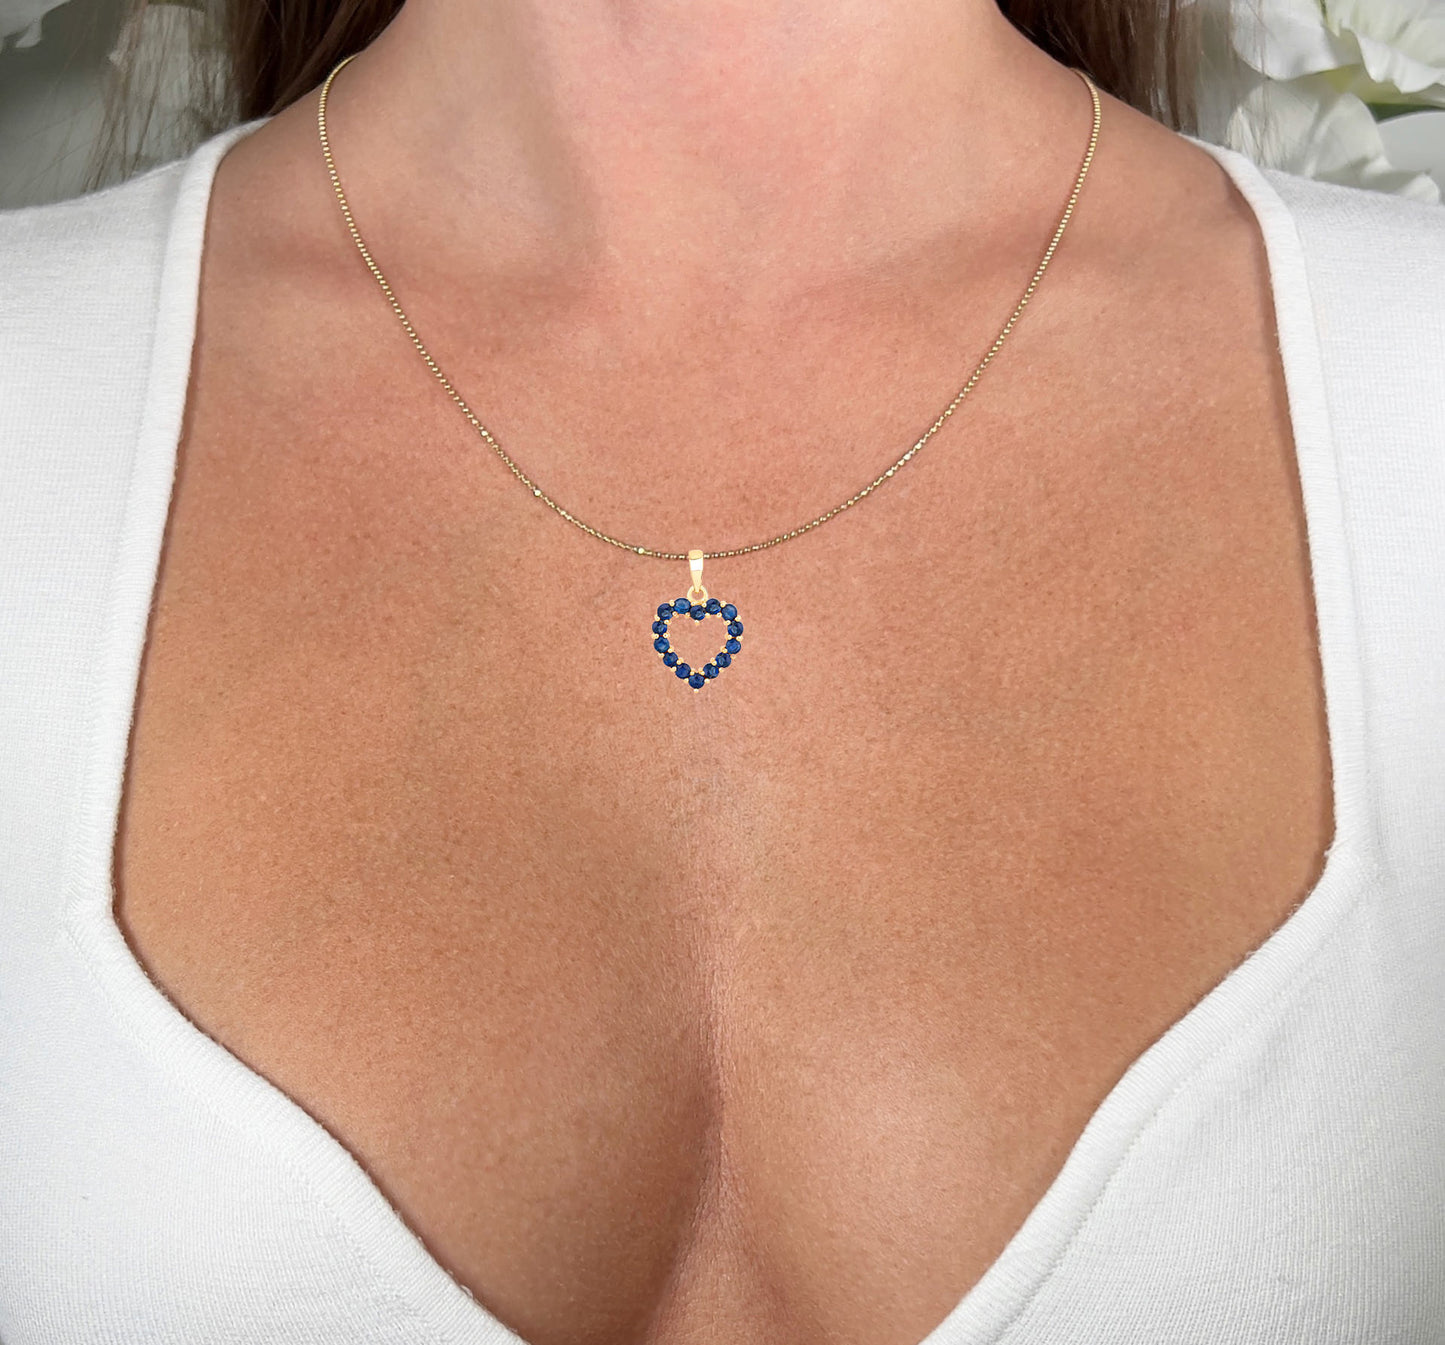 Blue Sapphire Heart Pendant Necklace 10K Yellow Gold